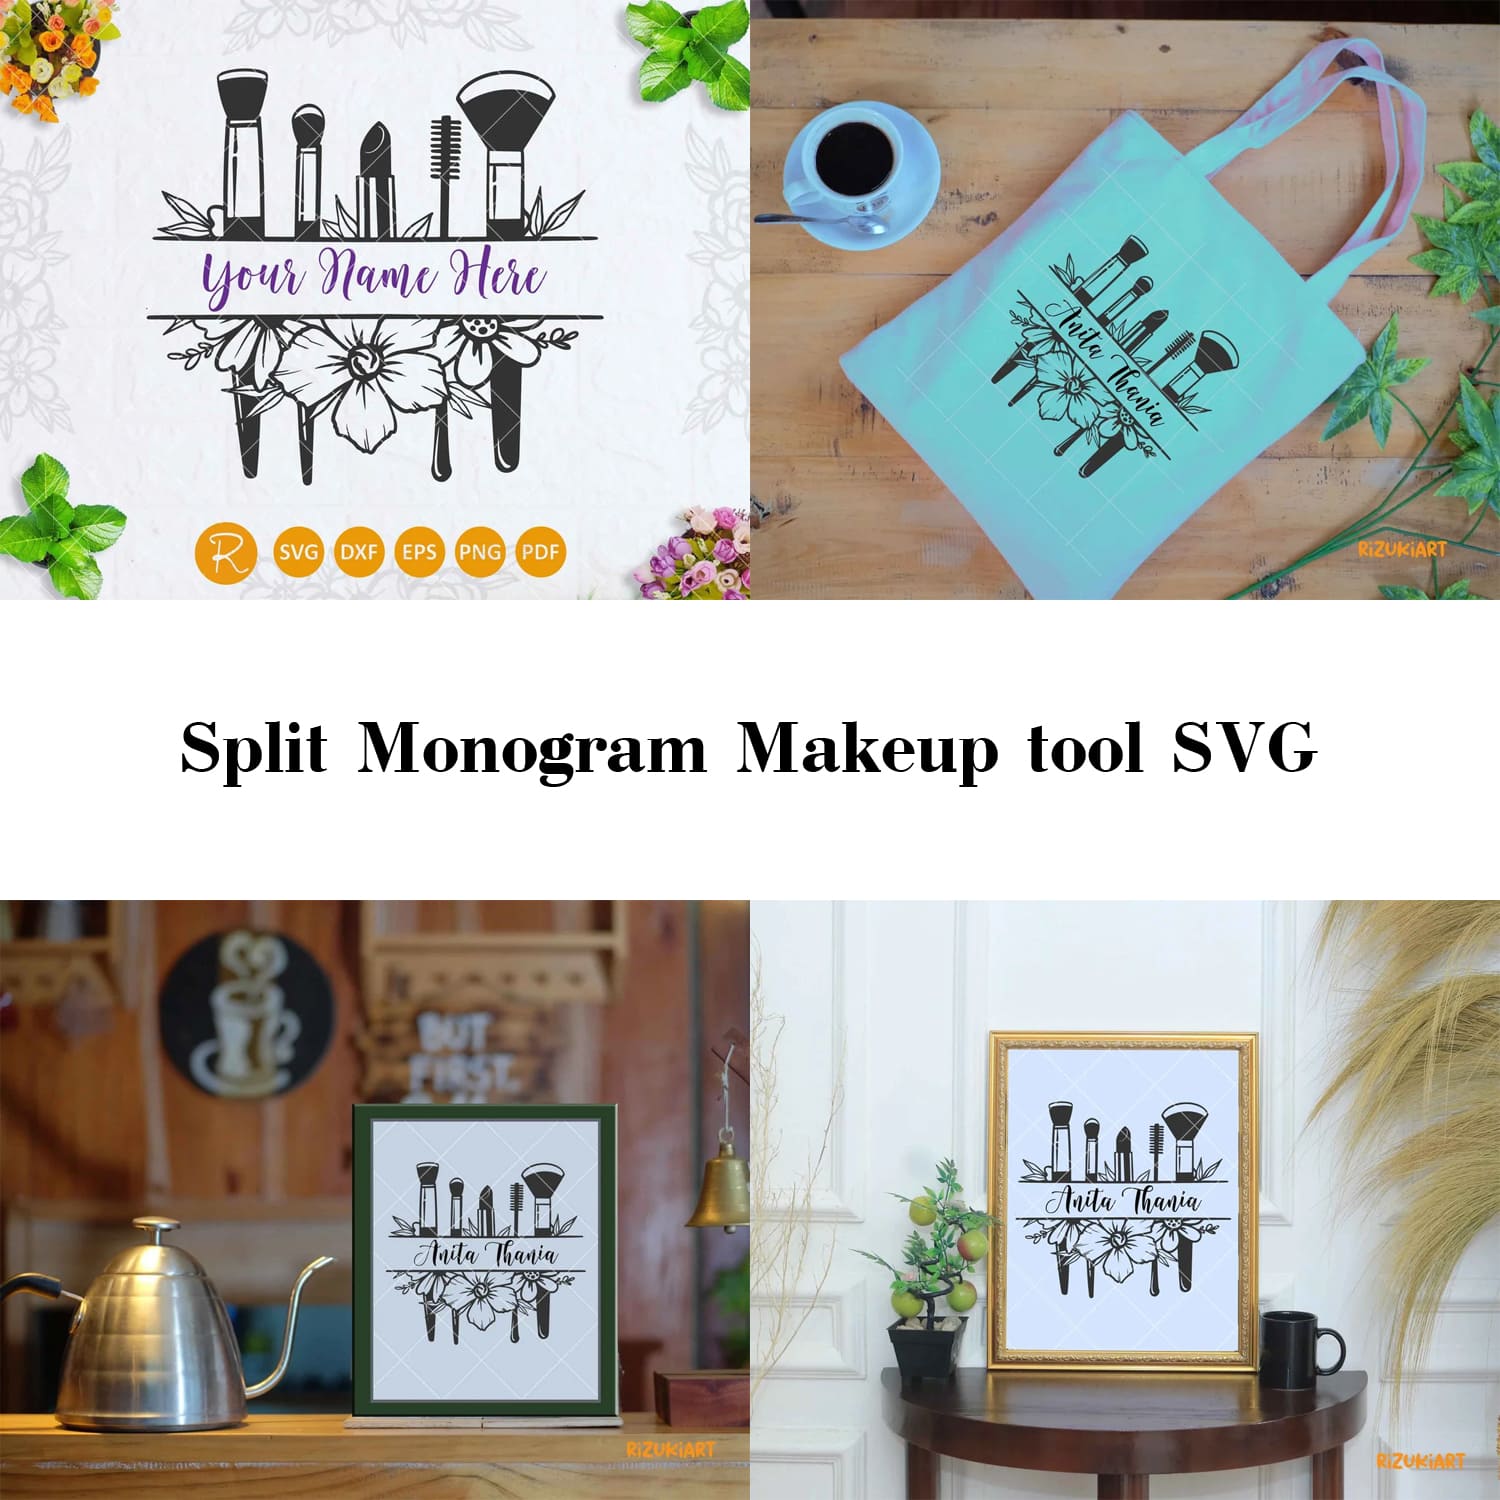 Split Monogram Makeup Tool SVG cover image.